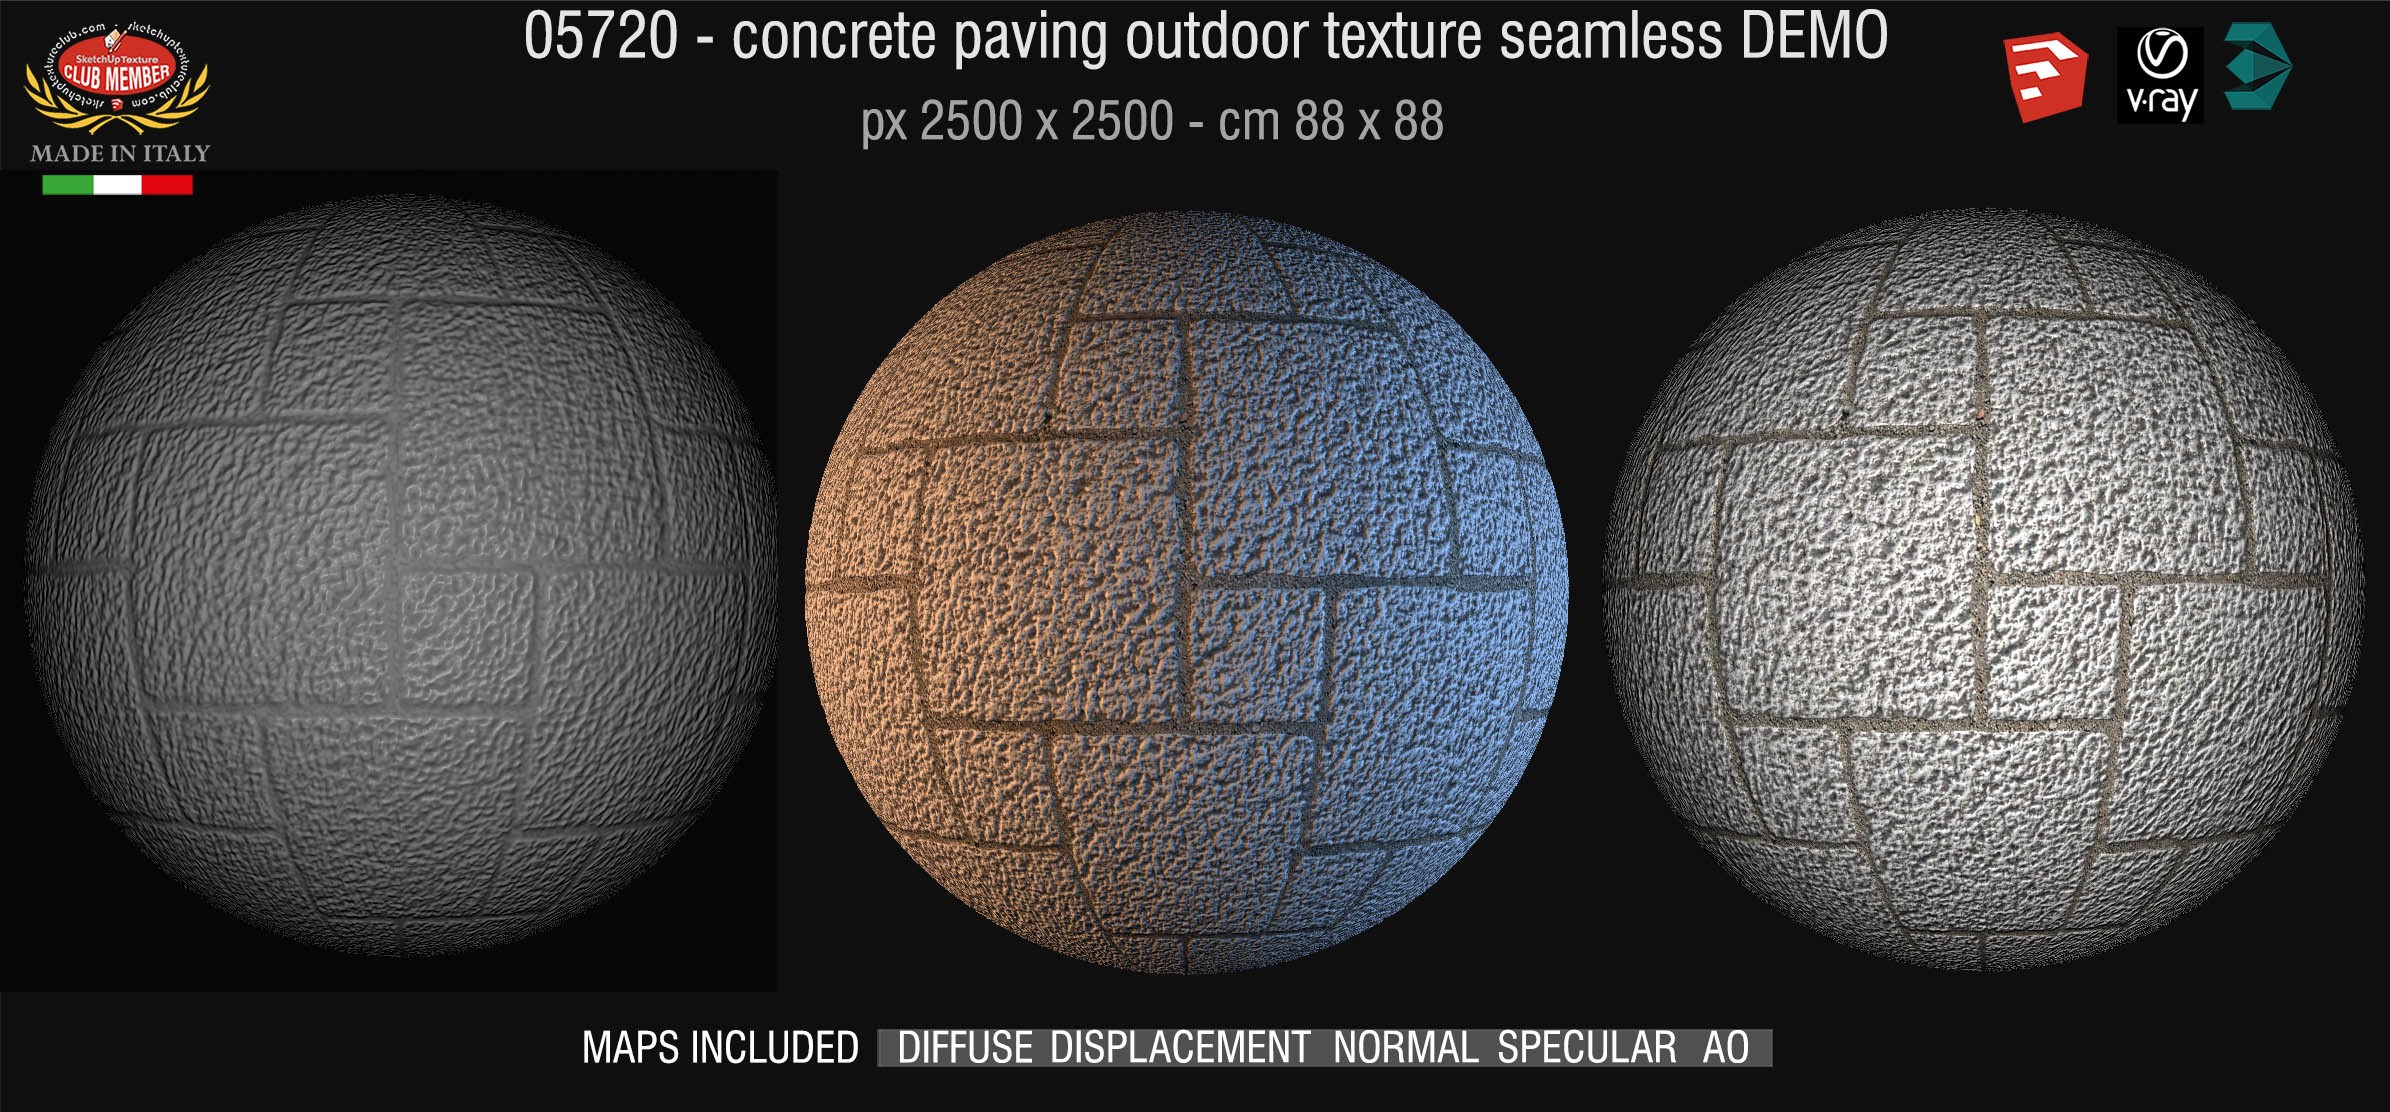 05720 HR Paving outdoor concrete regular block texture + maps DEMO